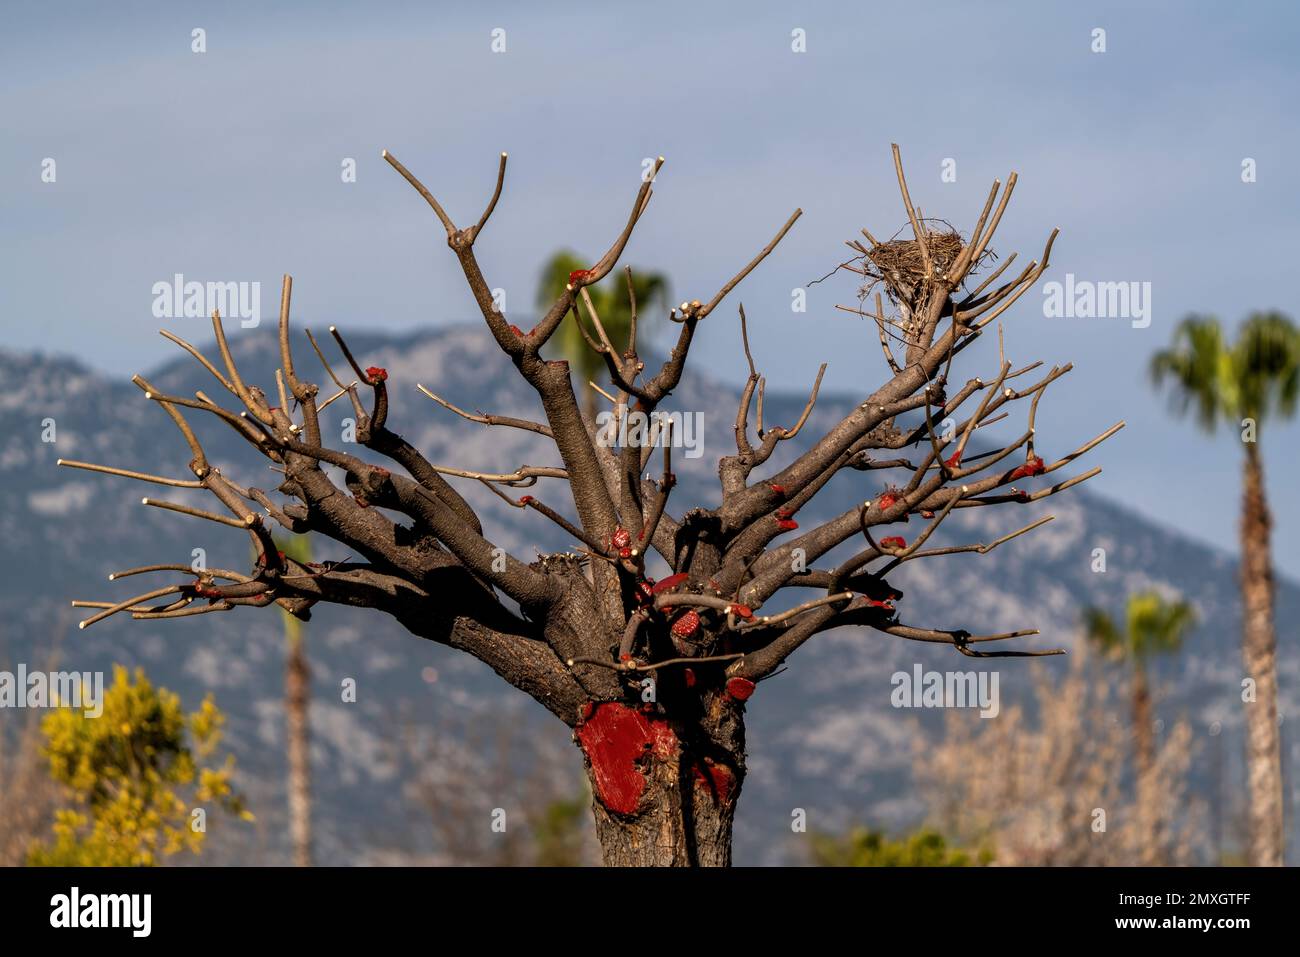 A pruned tree, on the tree Burgundy slurry  and bird's nest Stock Photo